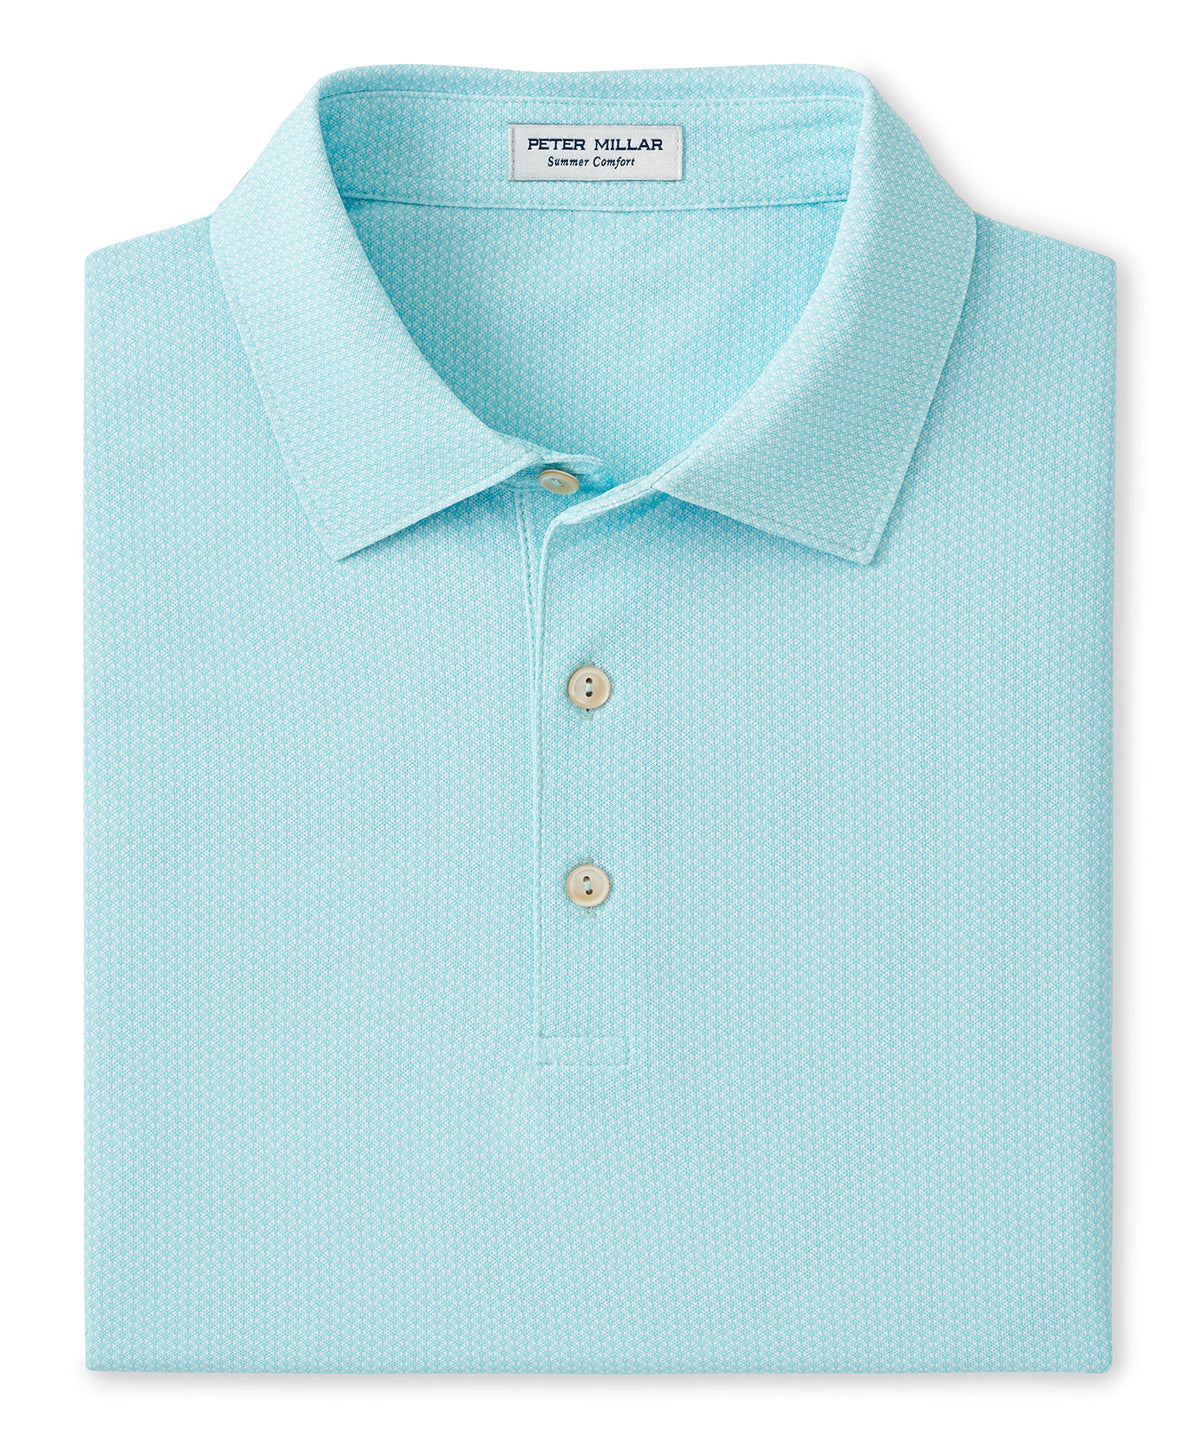 Peter Millar Short Sleeve Vienna Print Polo Knit Shirt, Big & Tall